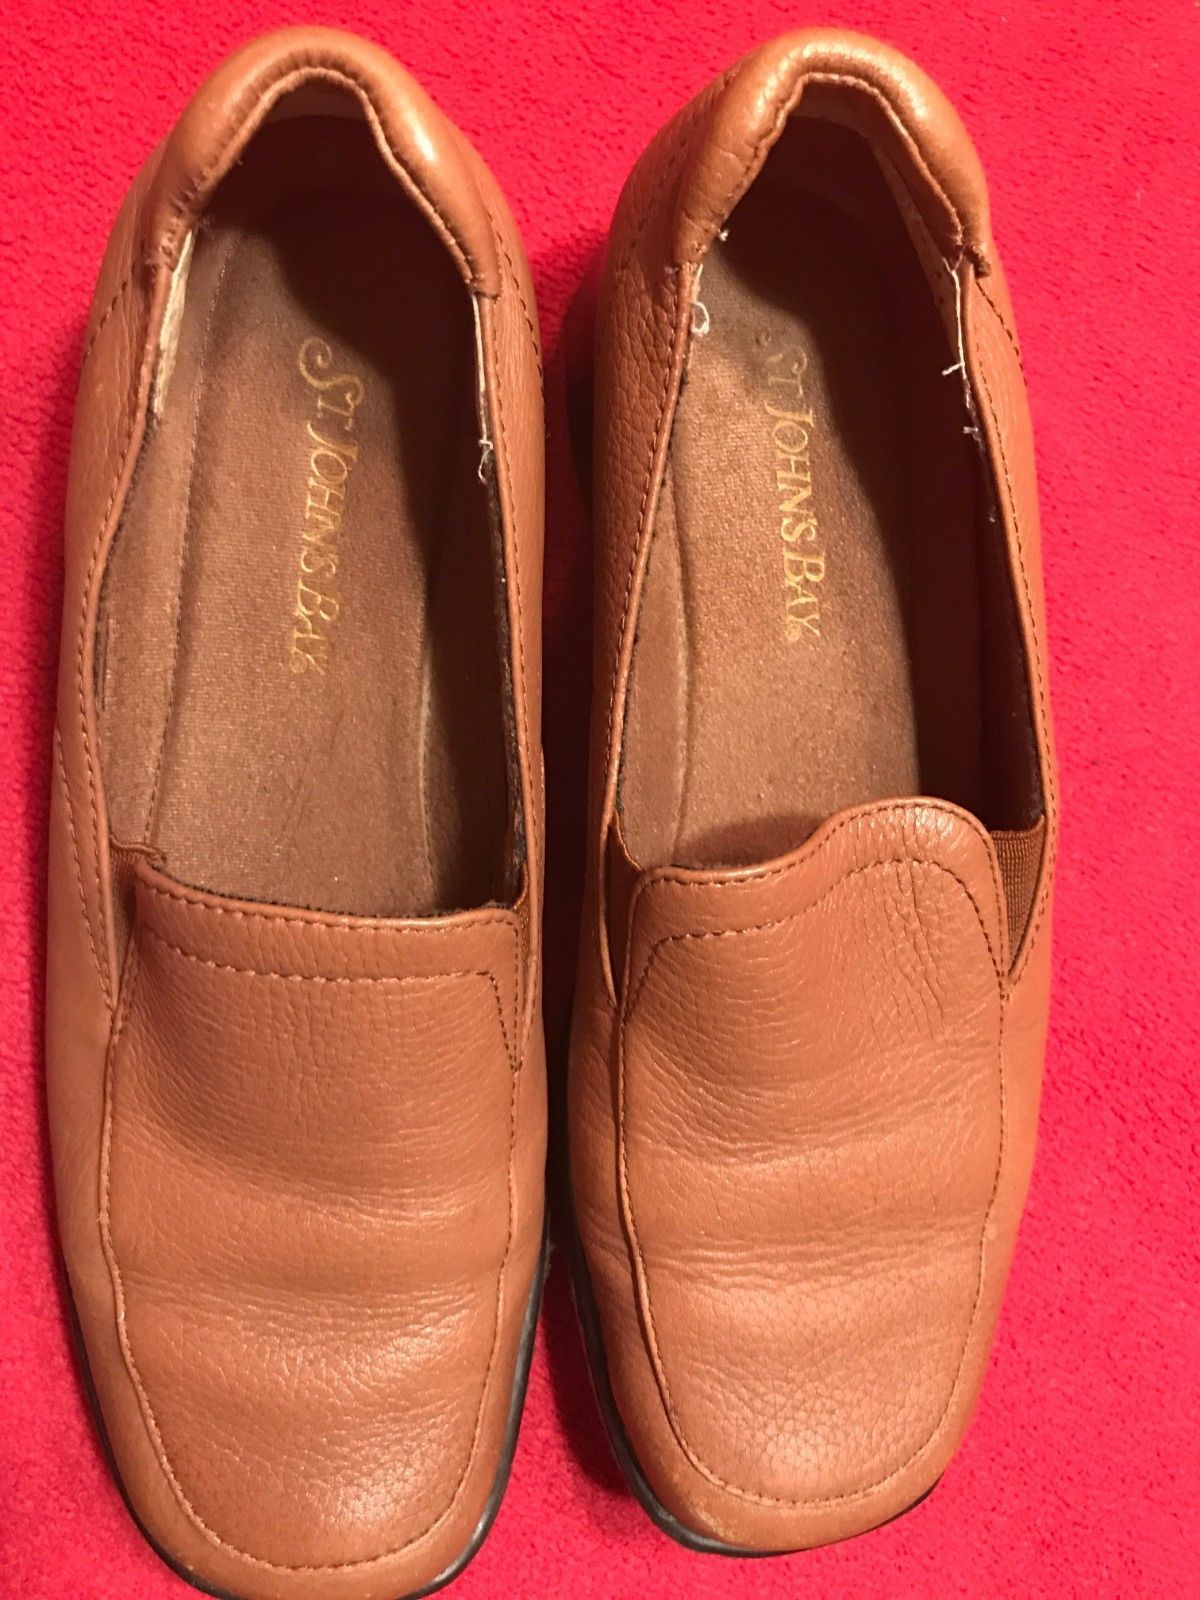 Women's St.John's Bay Loafers, Size 6.5 M, Brown Slip on